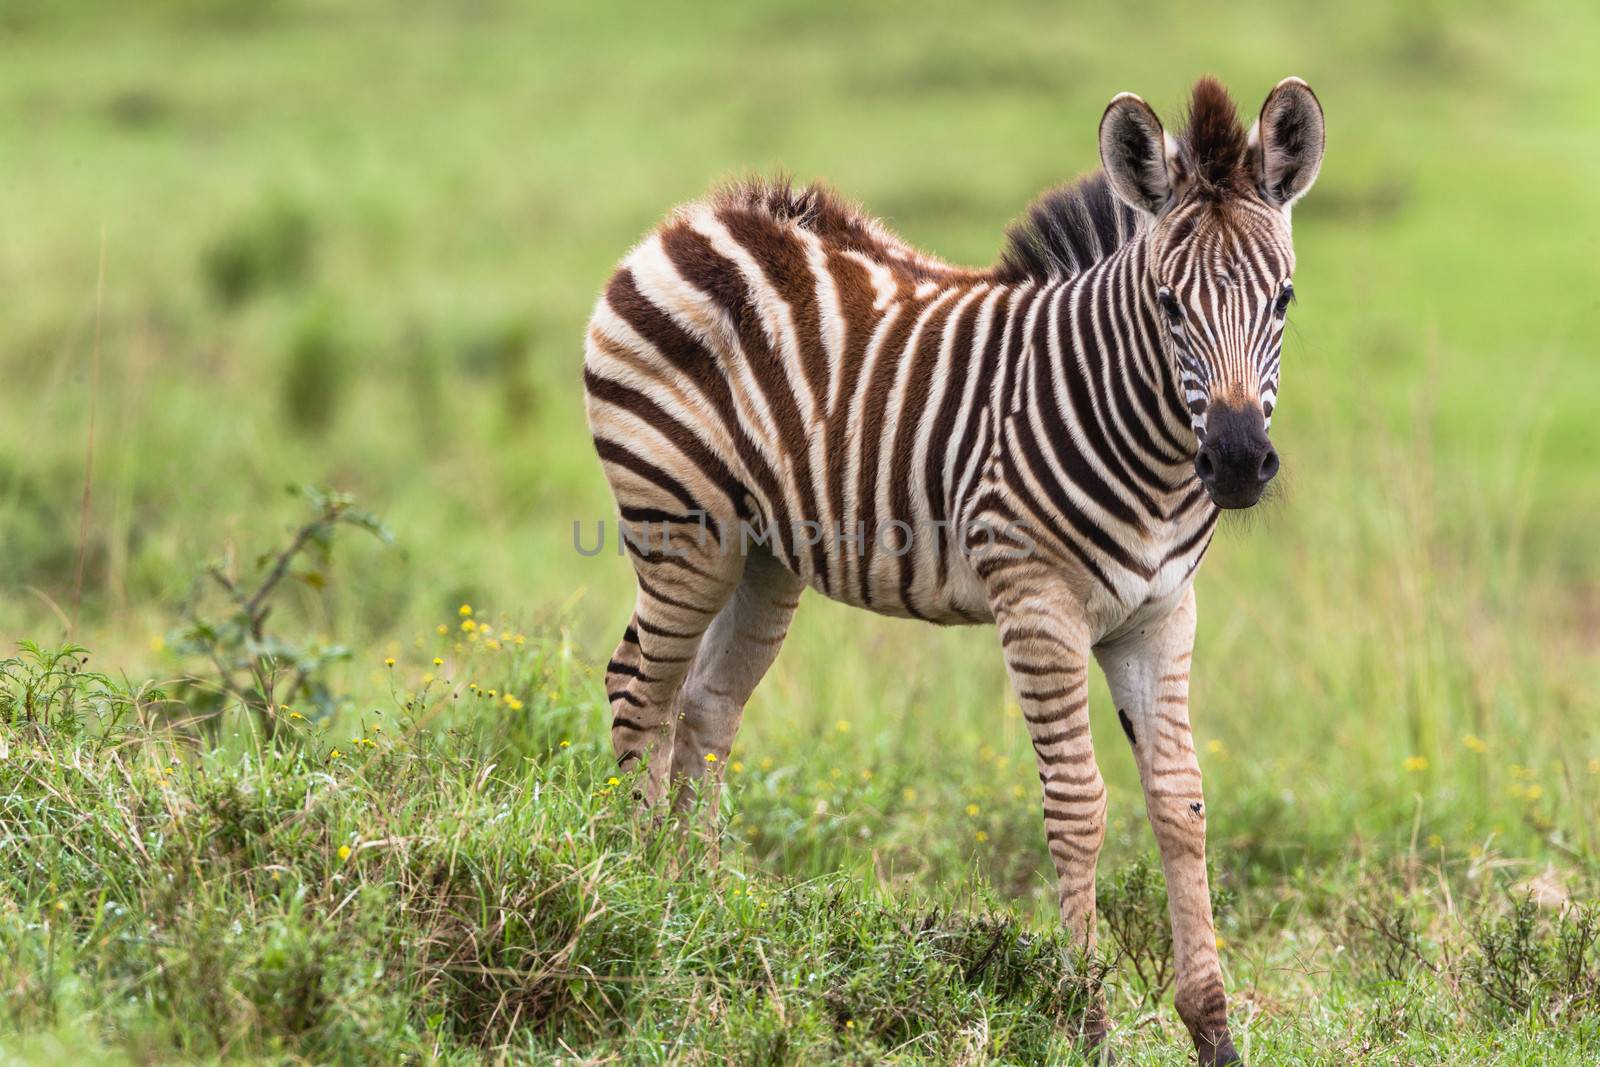 Zebra calf in wildlife animal reserve nearby mother.